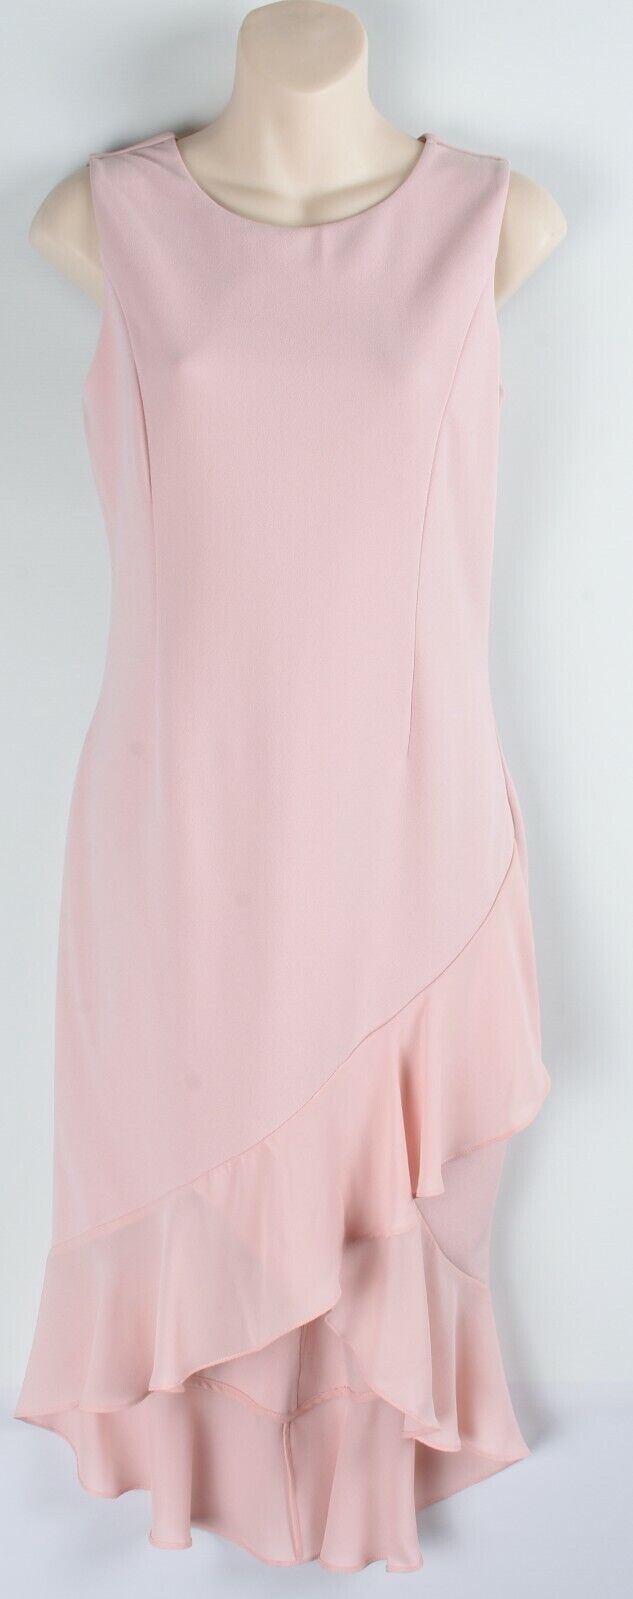 IVANKA TRUMP Women's Blush Pink Crepe Midi Dress, size UK 10